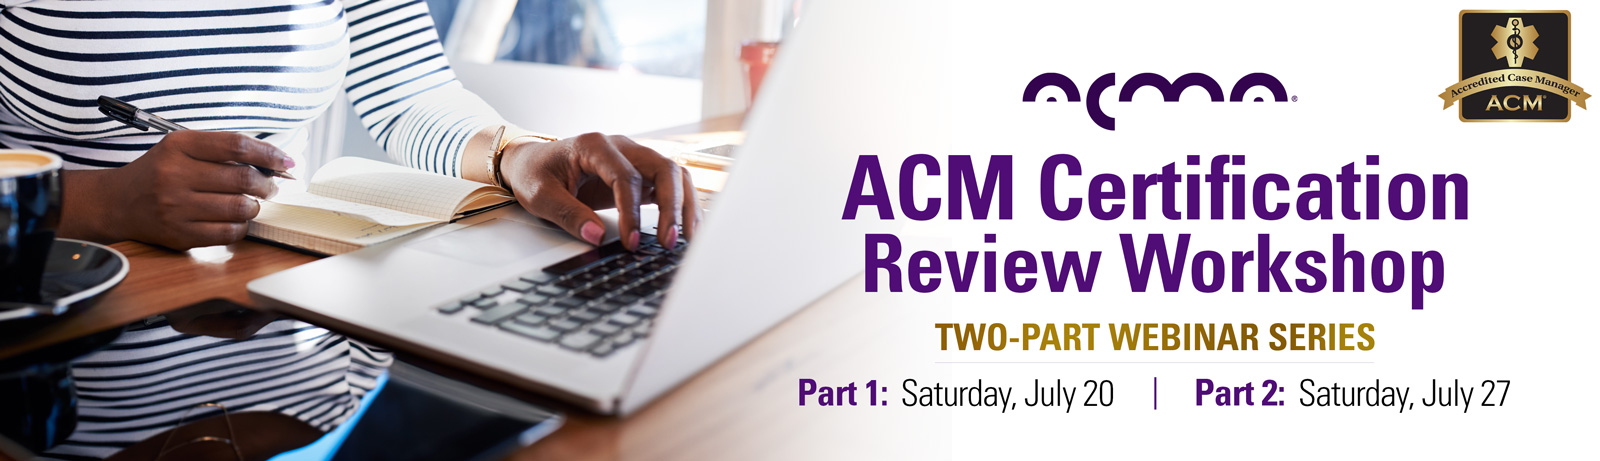 Summer 2019: ACM Certification Webinar Series